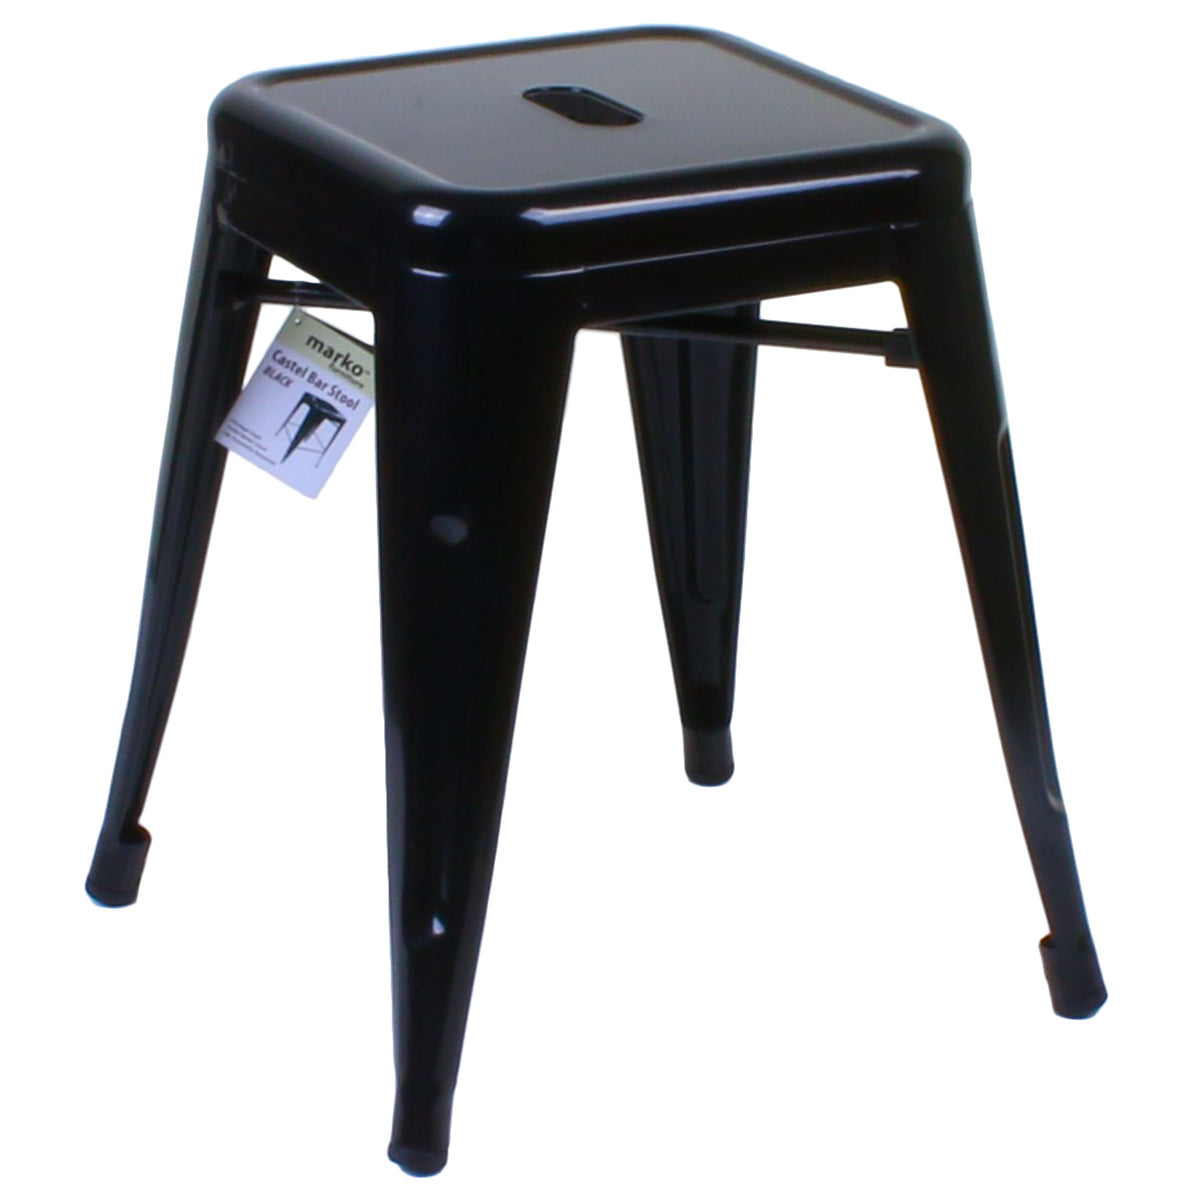 7PC Prato Table, 2 Siena Chairs & 4 Castel Stools Set - Black